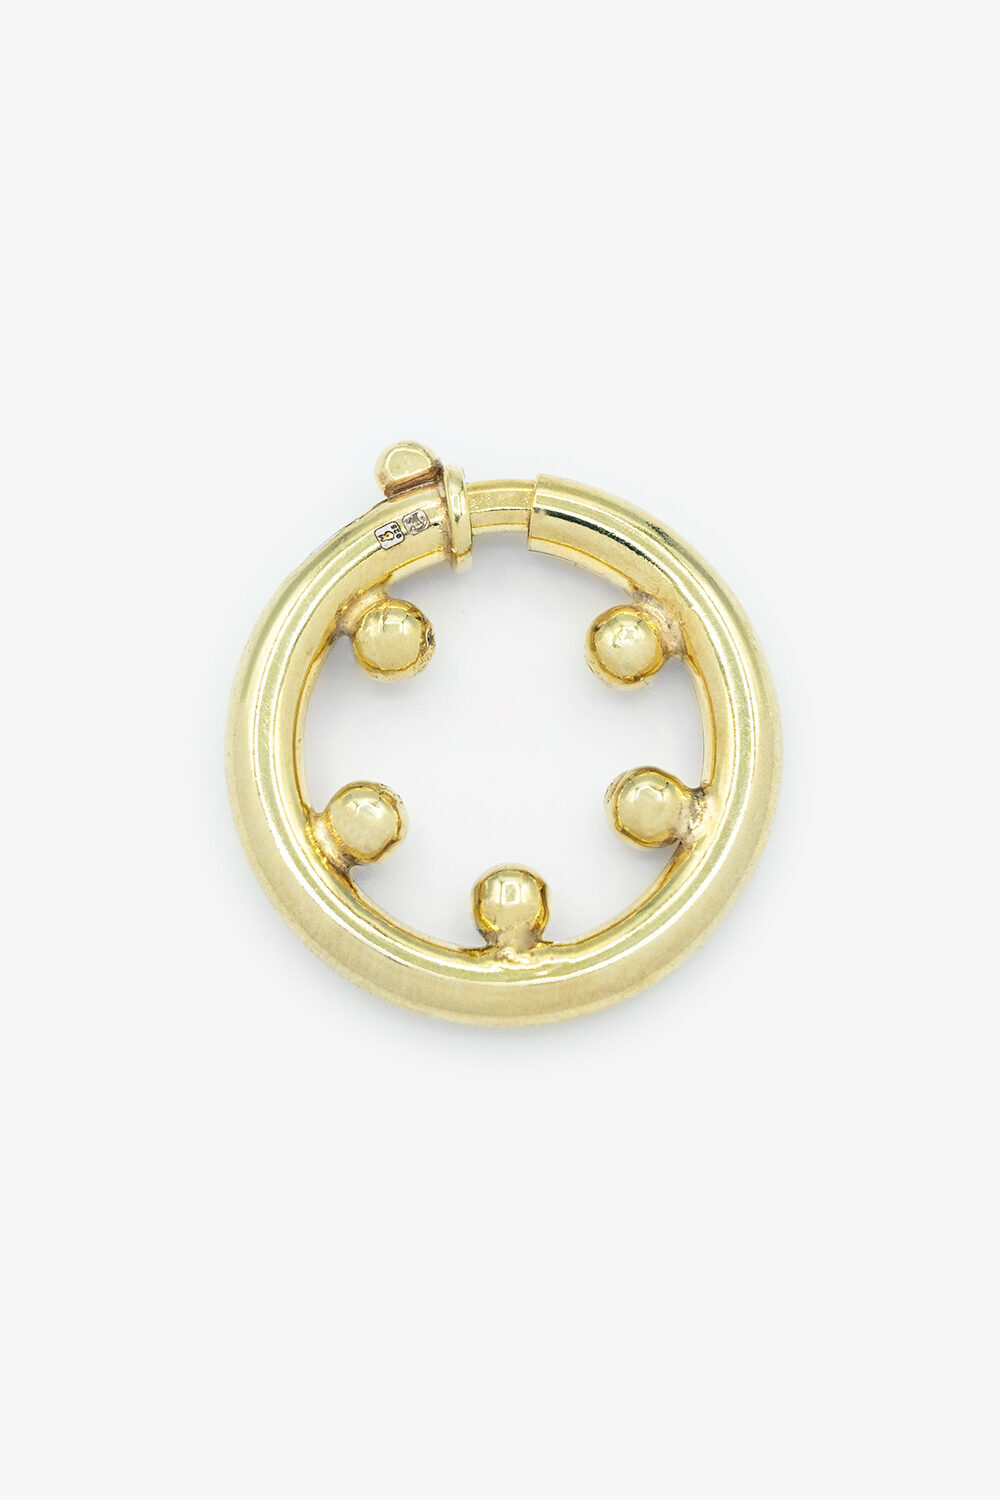 Jewellery Concept: Lock Moges Dourado